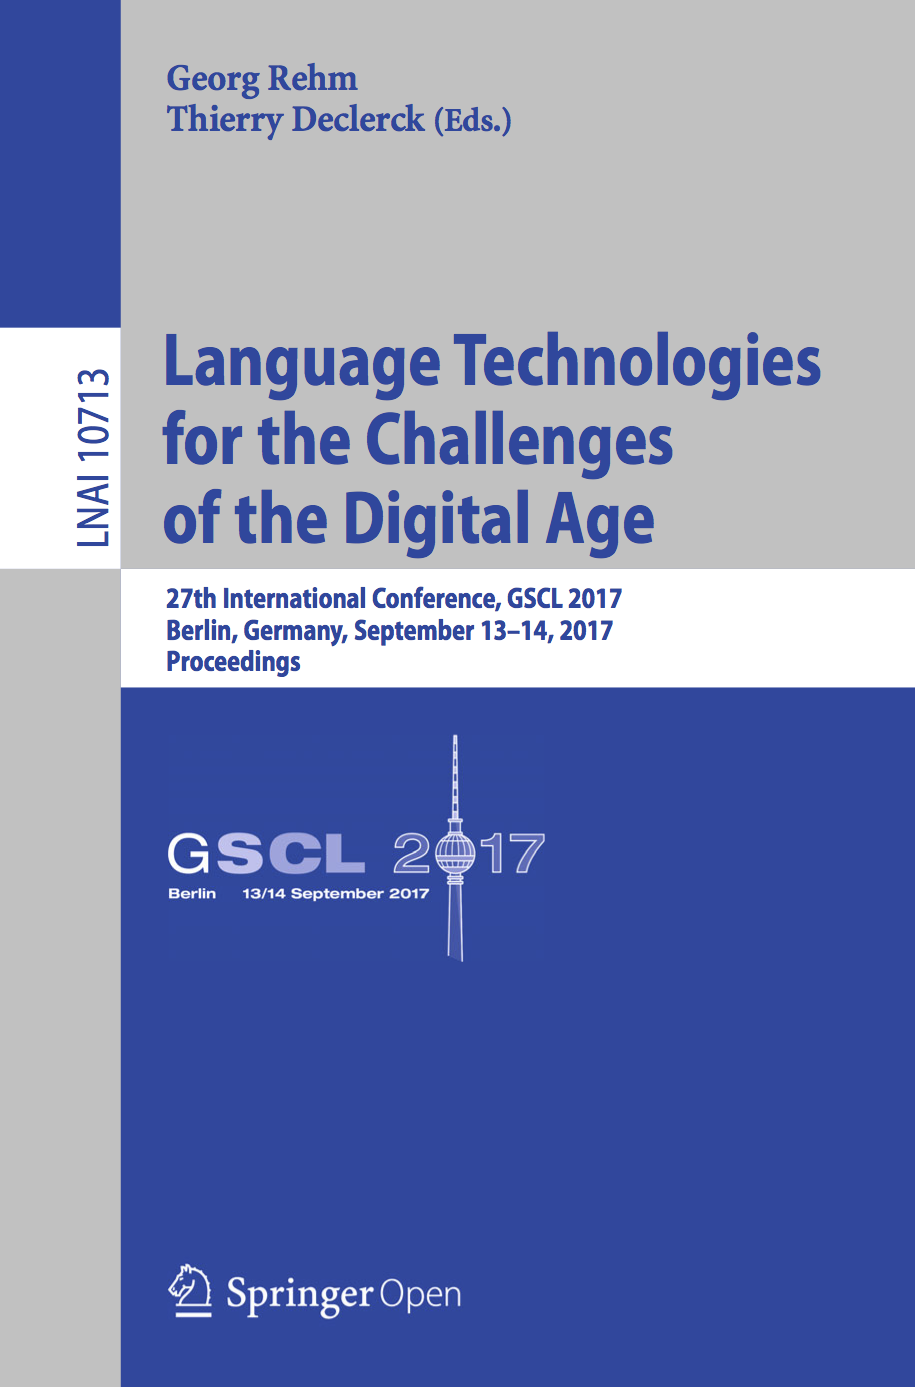 GSCL 2017 Proceedings